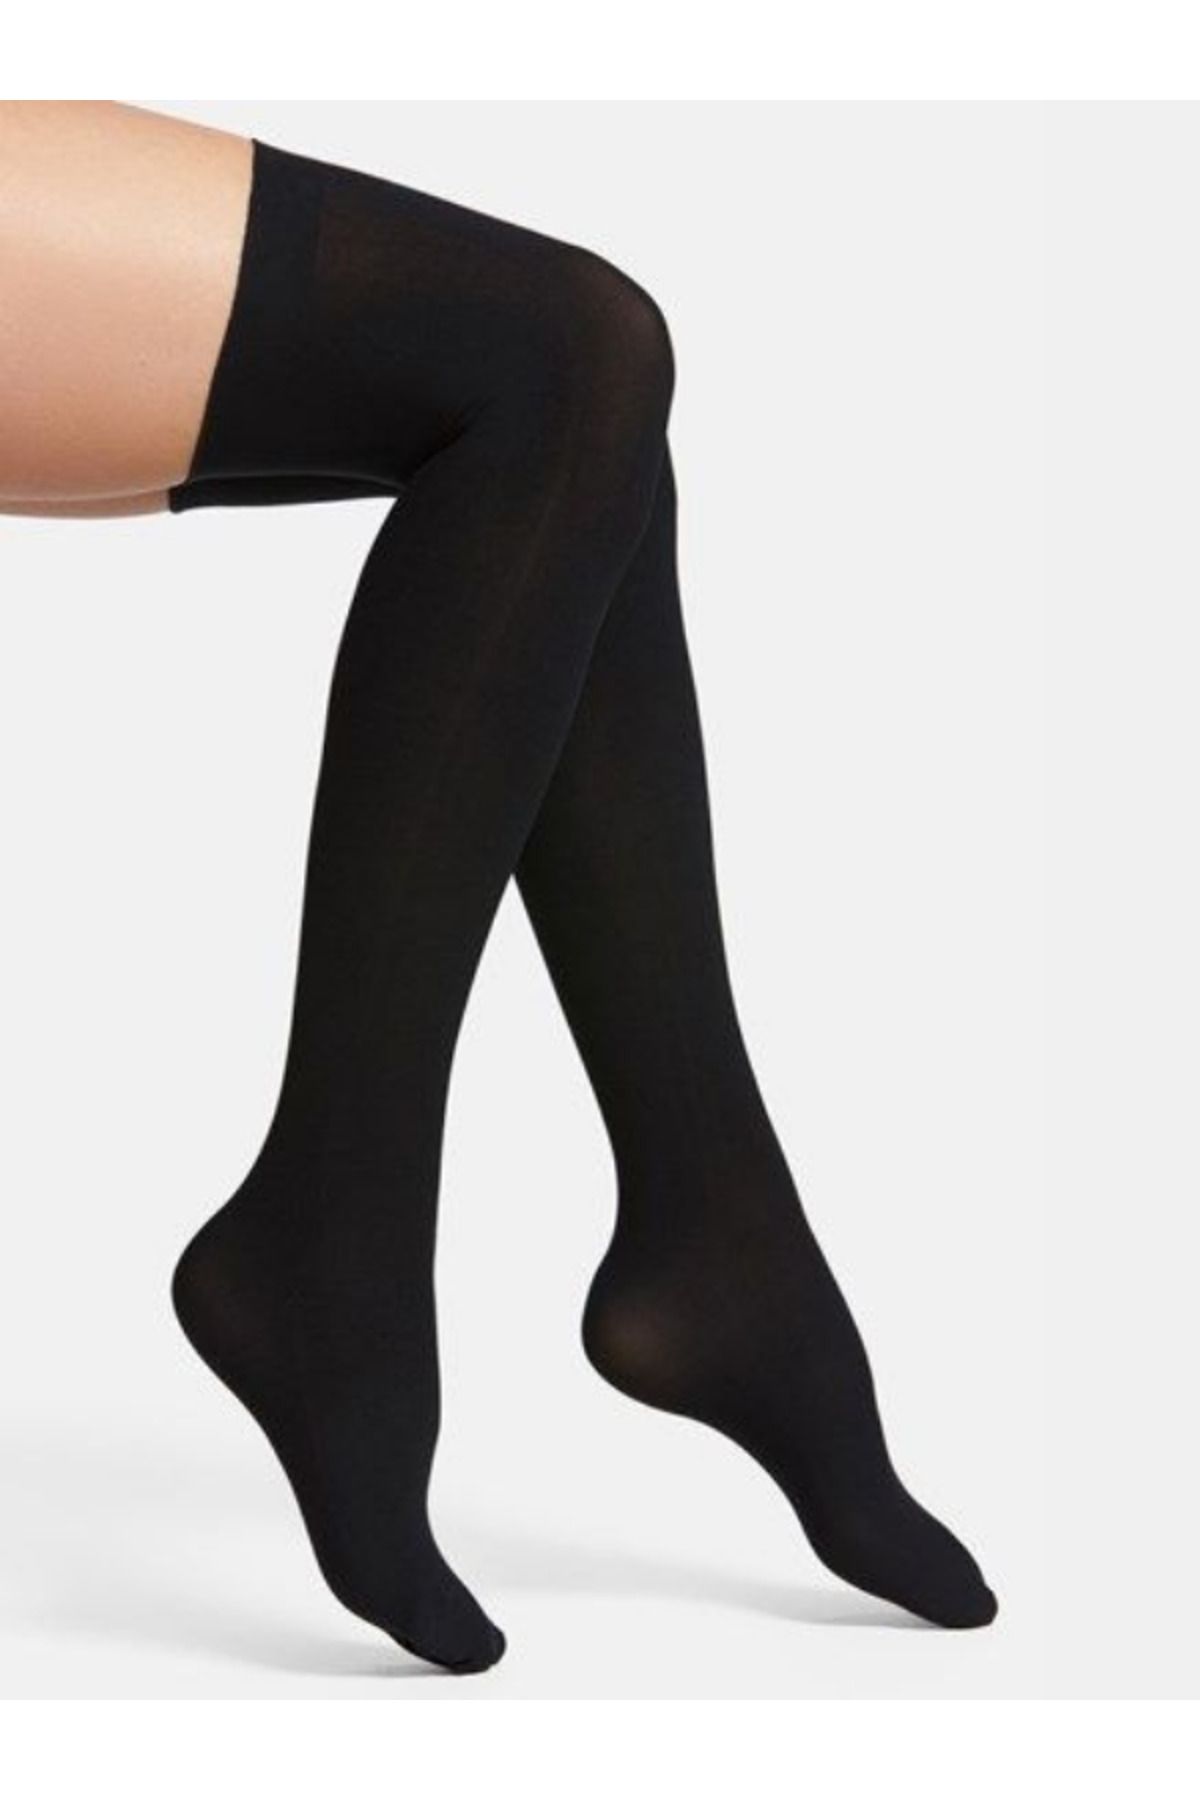 Happy Socks İthal Özel Seri Women's Extra Long Siyah Diz Üstü Çorap